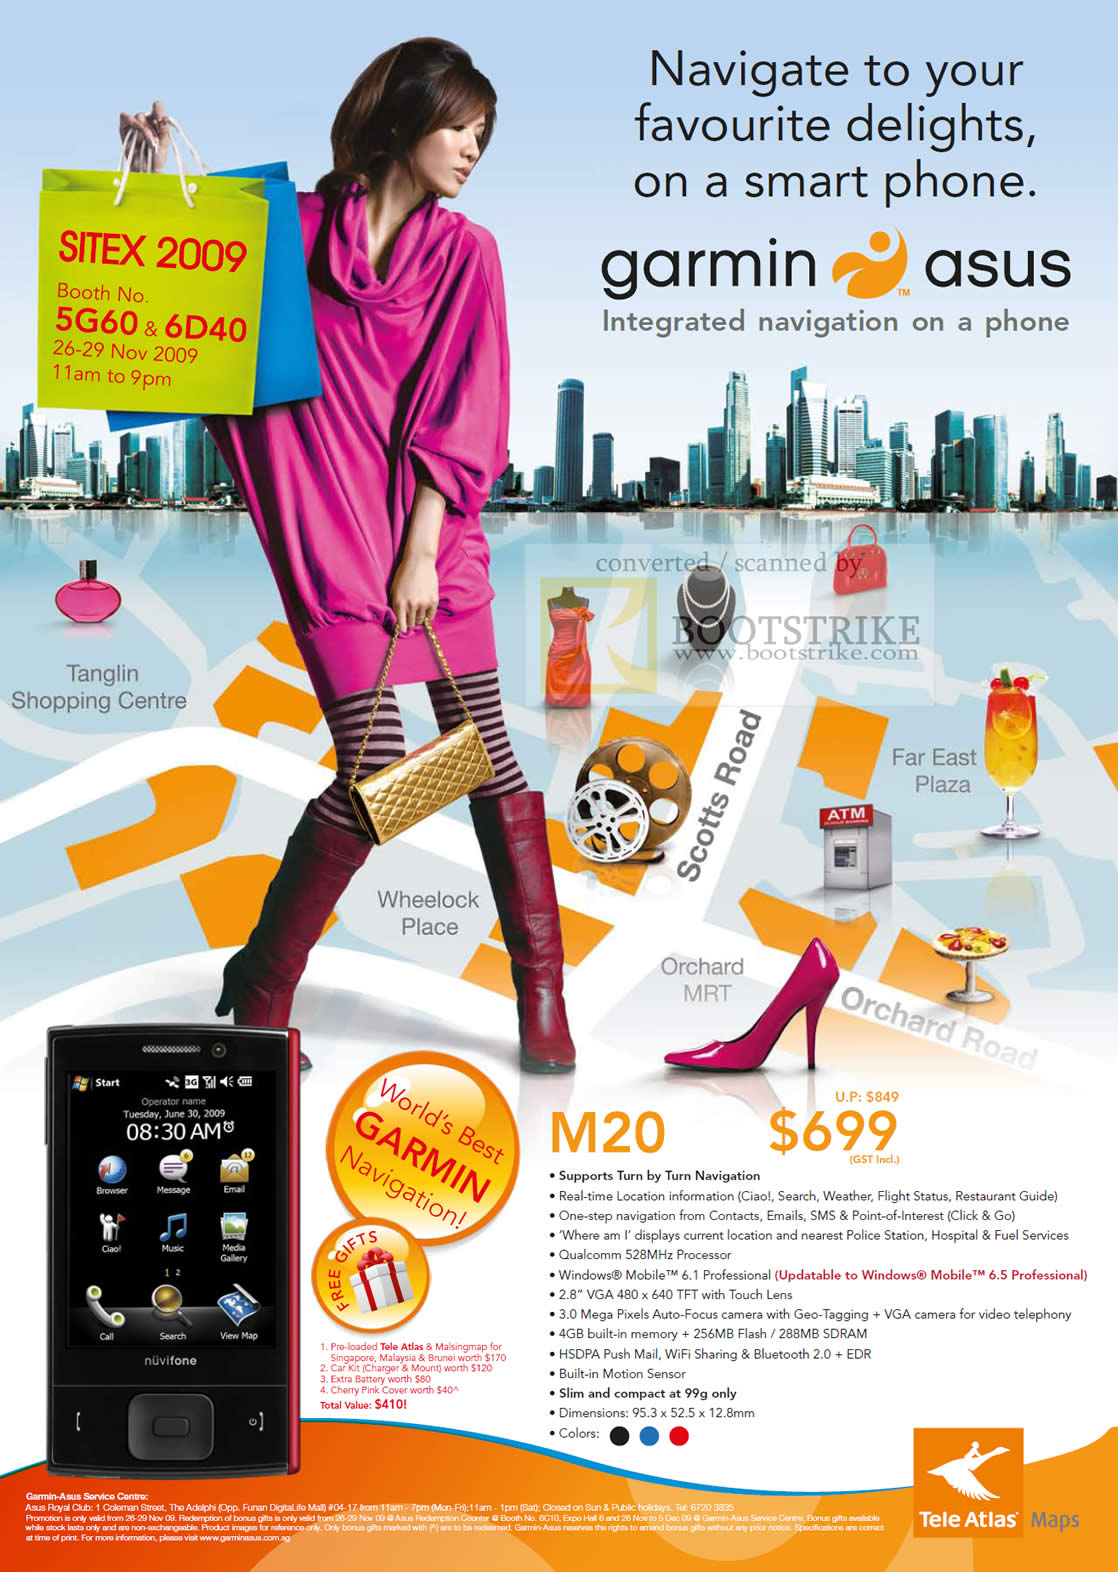 Sitex 2009 price list image brochure of ASUS Garmin Navigation M20 Phone TeleAtlas